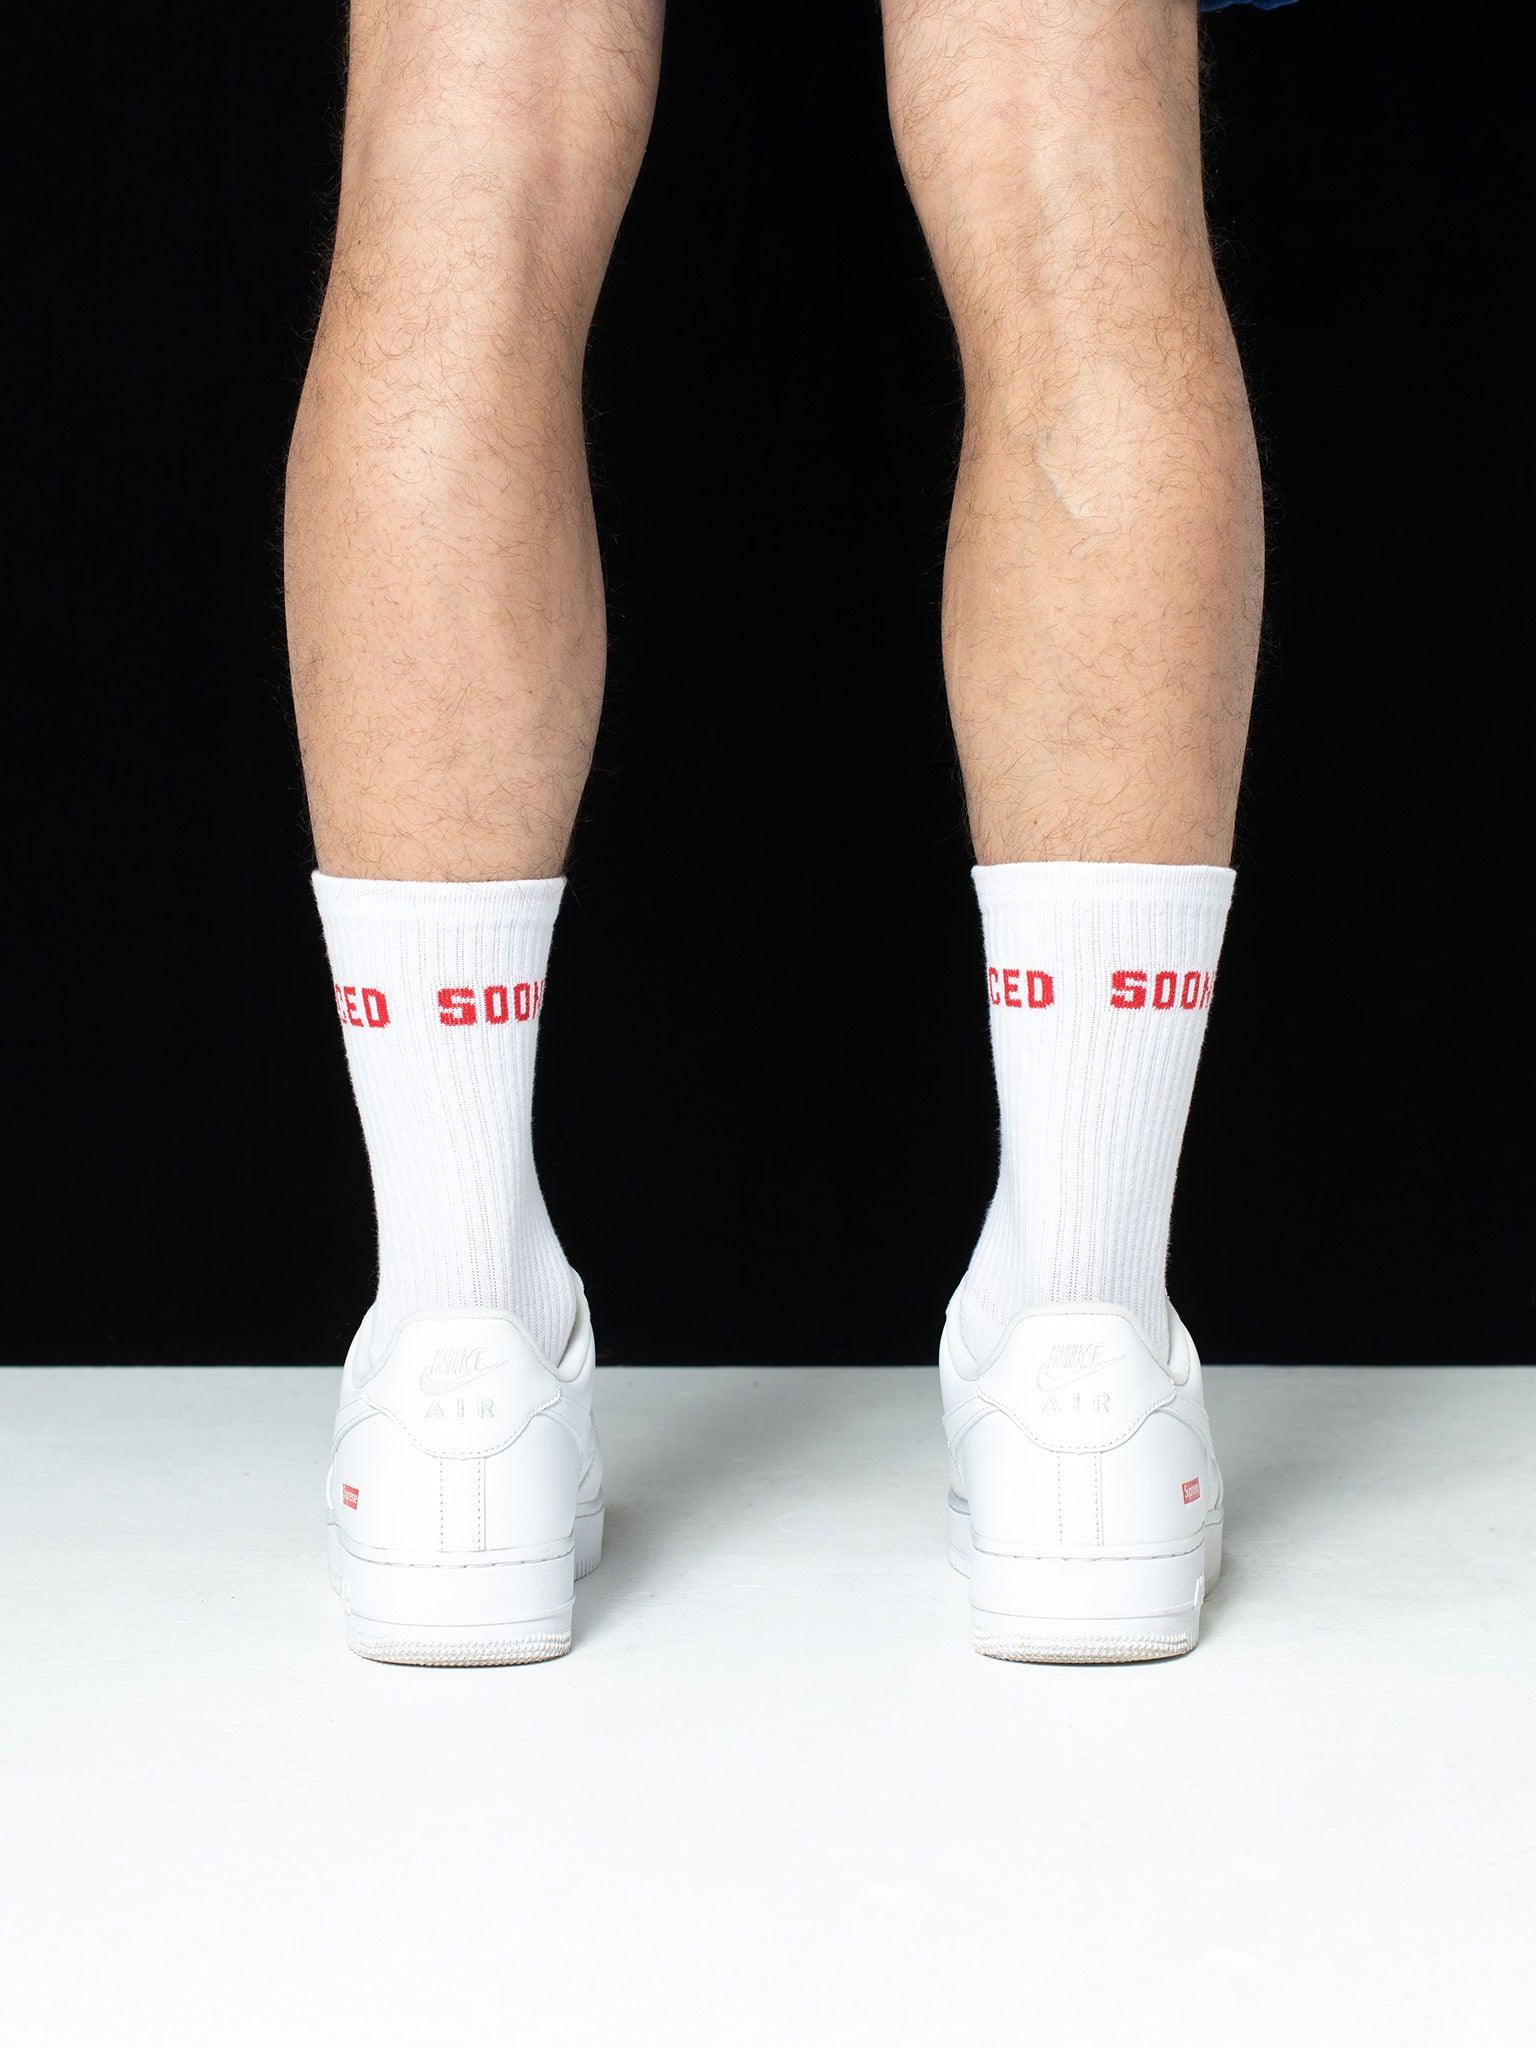 Logo Socks - SOON TO BE ANNOUNCED